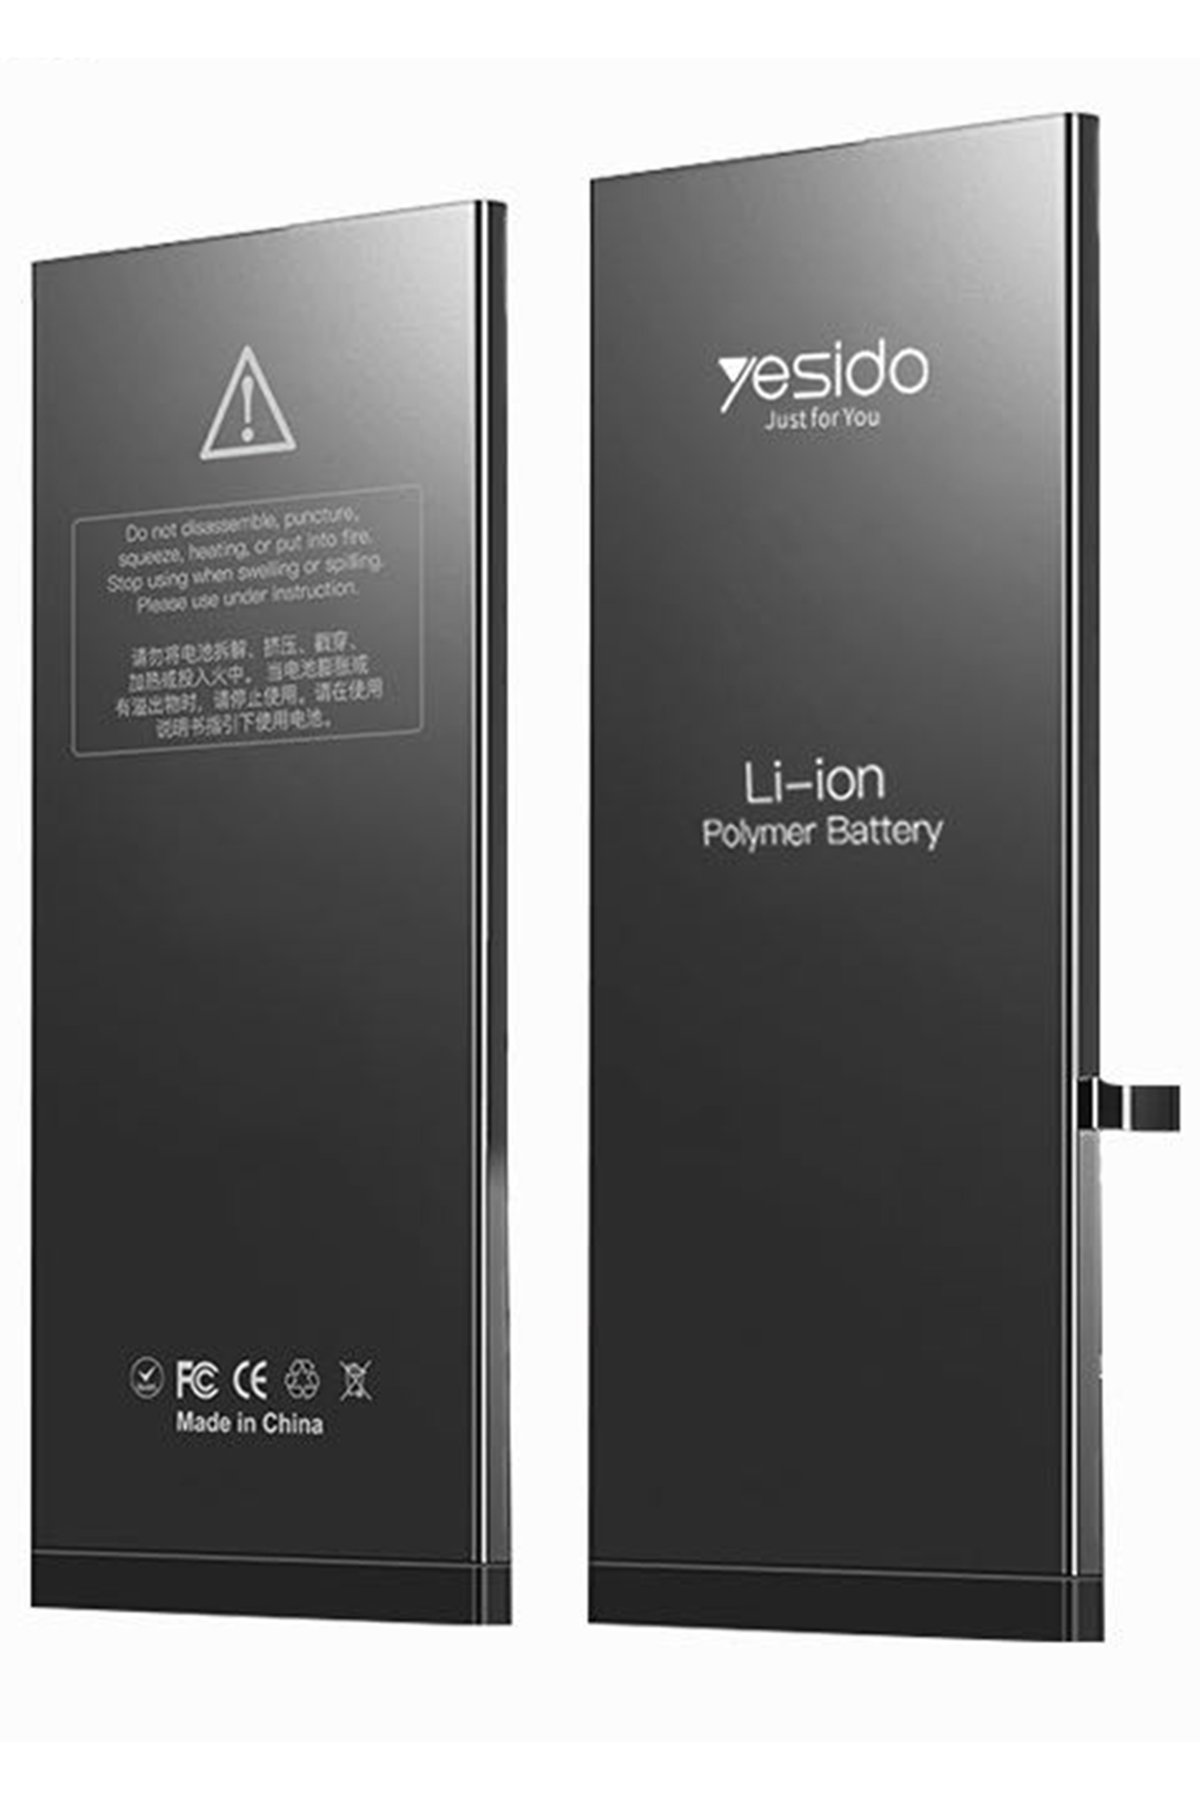 Yesido C85 Izgara Klipsli 360 Derece Ayarlanabilir 3.5 inç-6 inç Cihazla Uyumlu Telefon Tutucu - Siyah